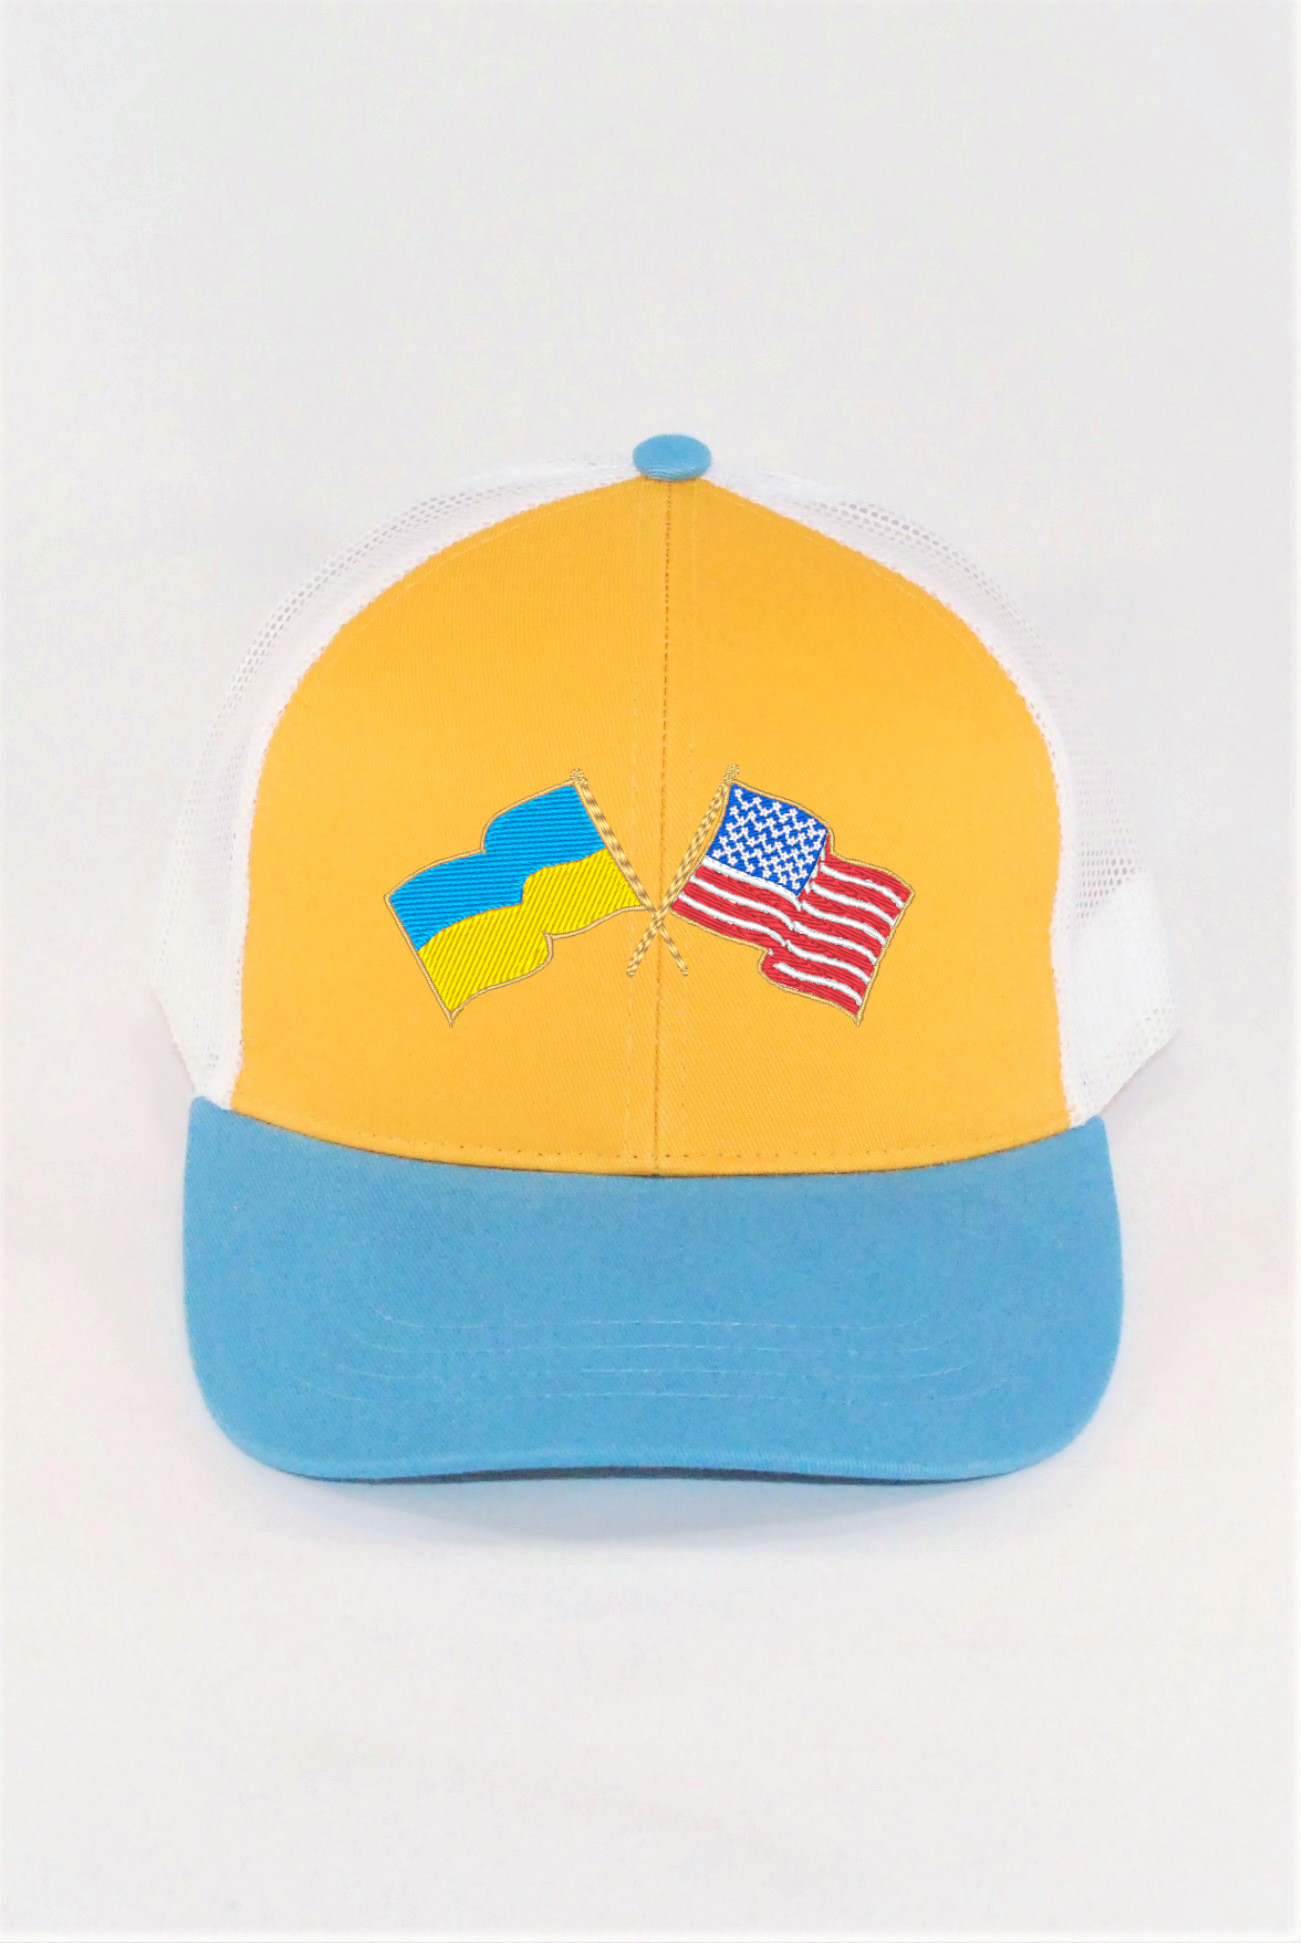 Embroidered bill cap "Ukrainian-American"